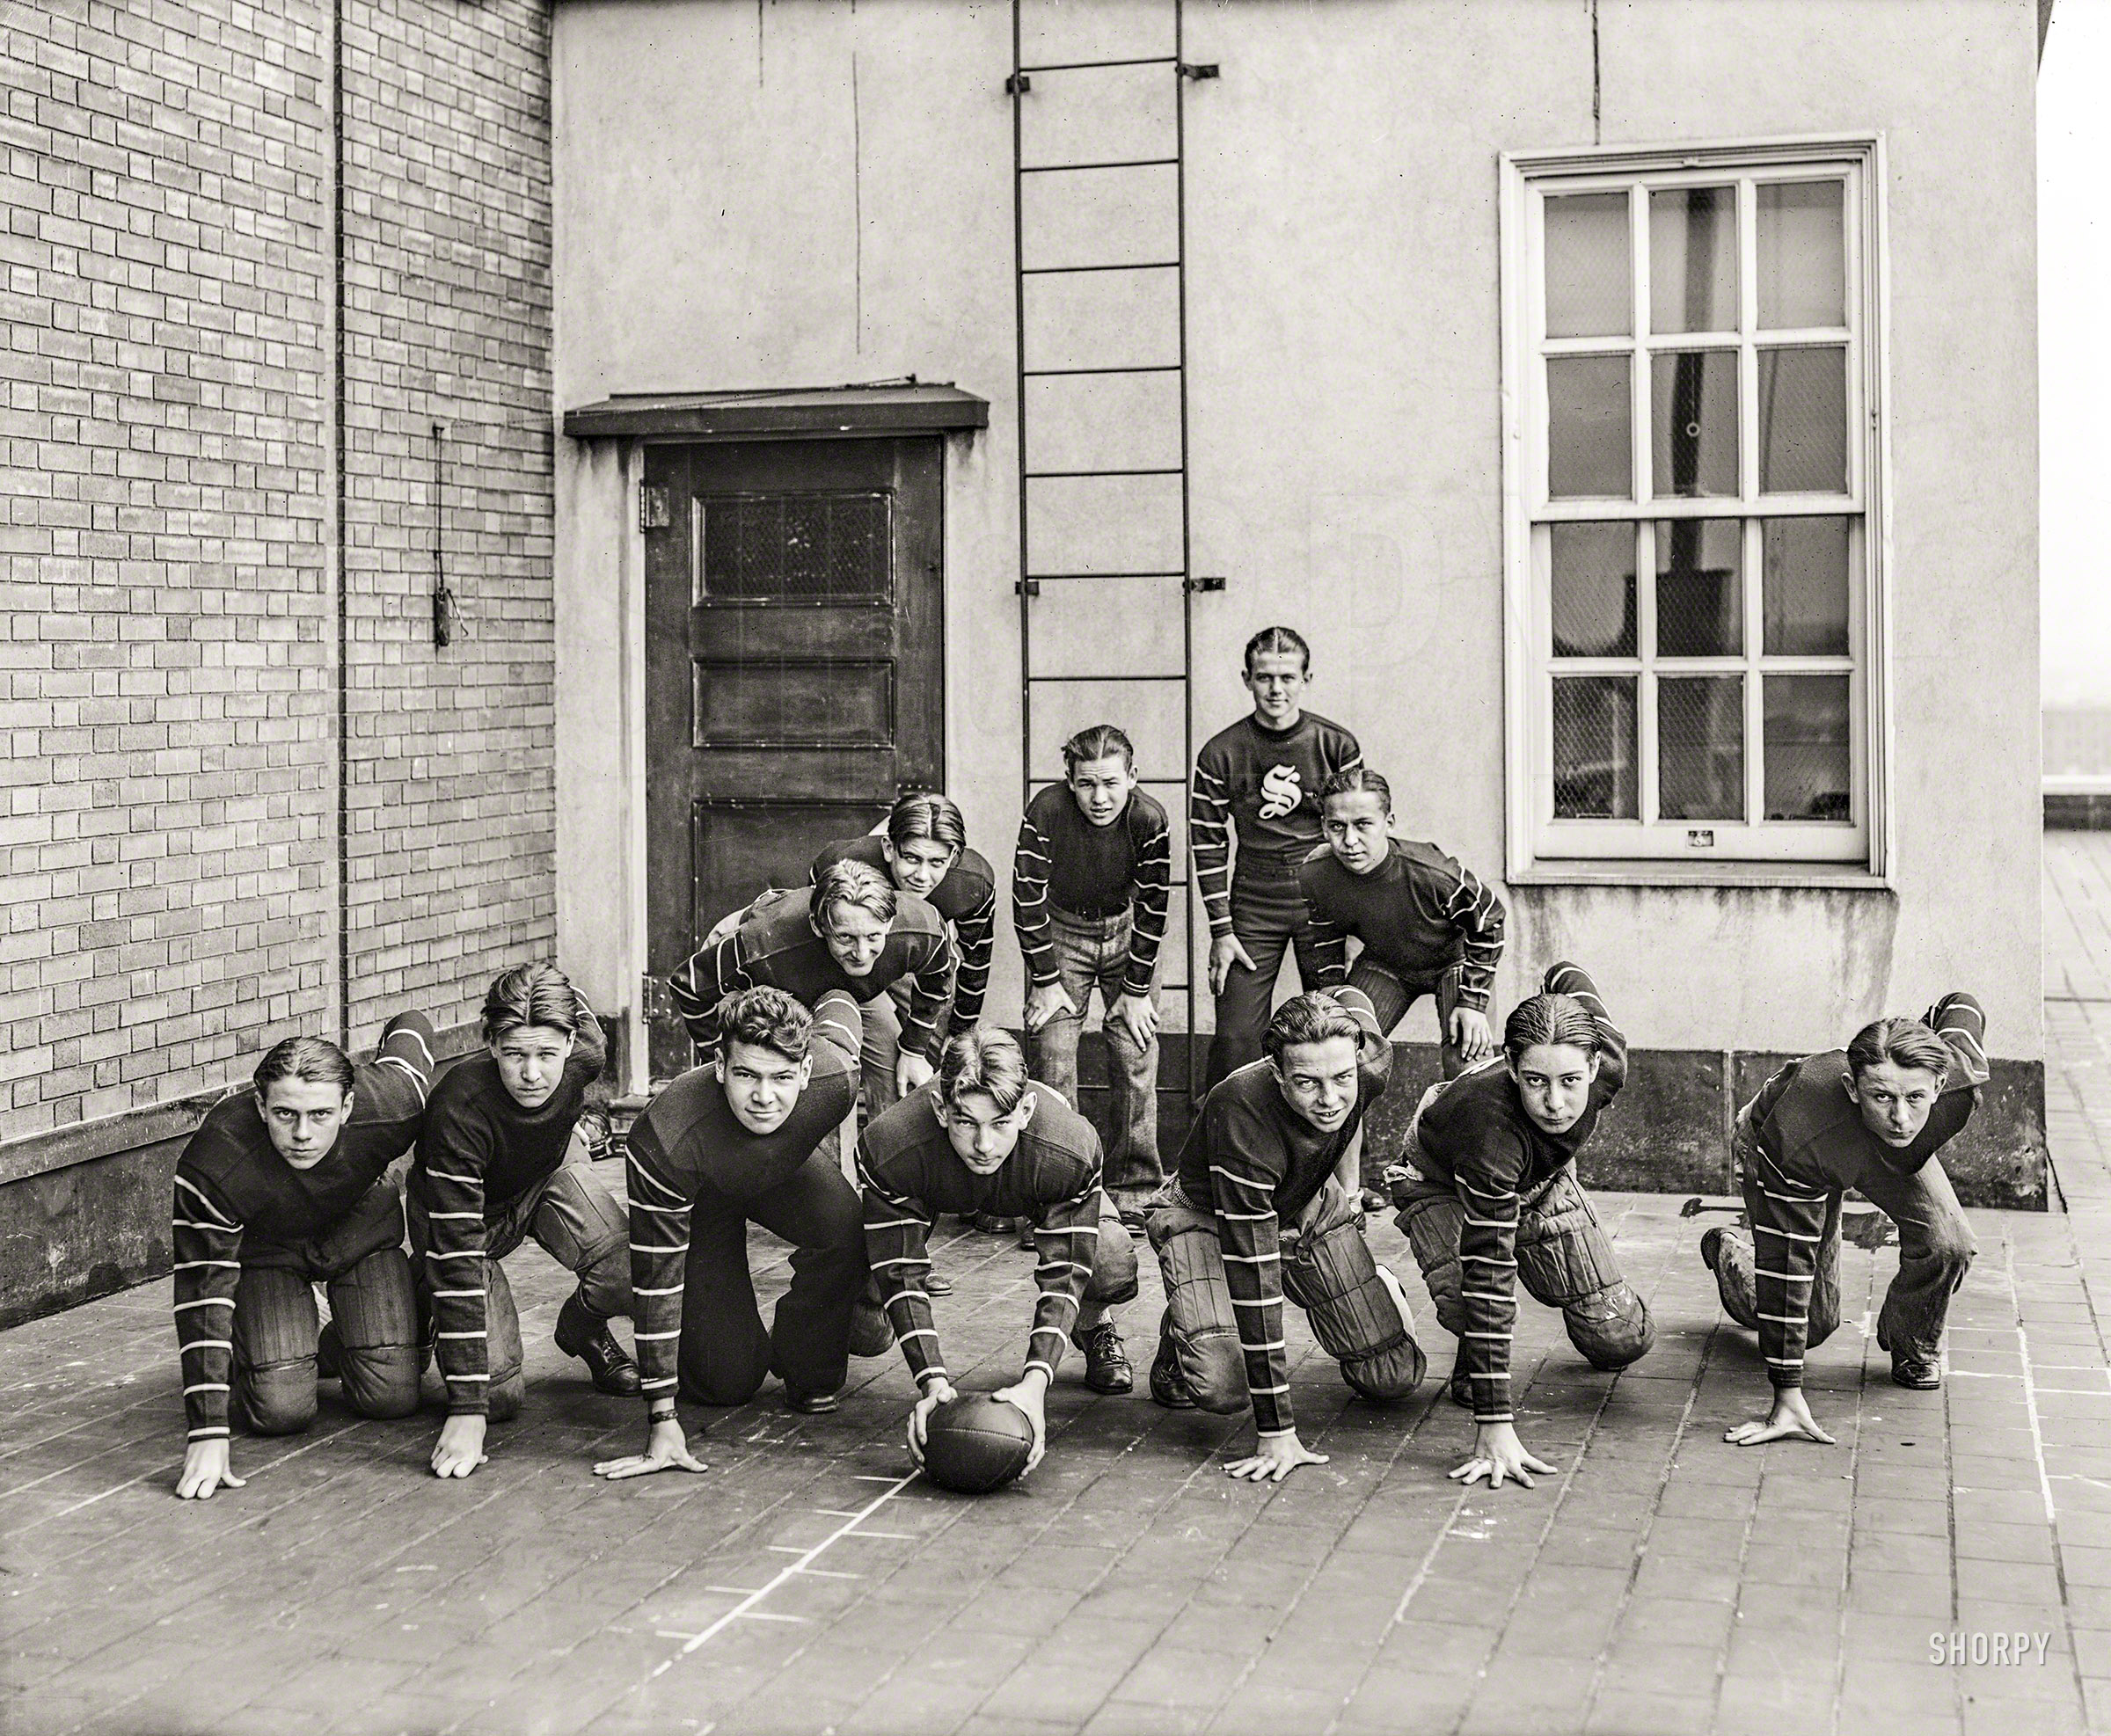 Washington, D.C., circa 1928. "Chesapeake & Potomac Telephone Co. office boys football team." National Photo Company glass negative. View full size.